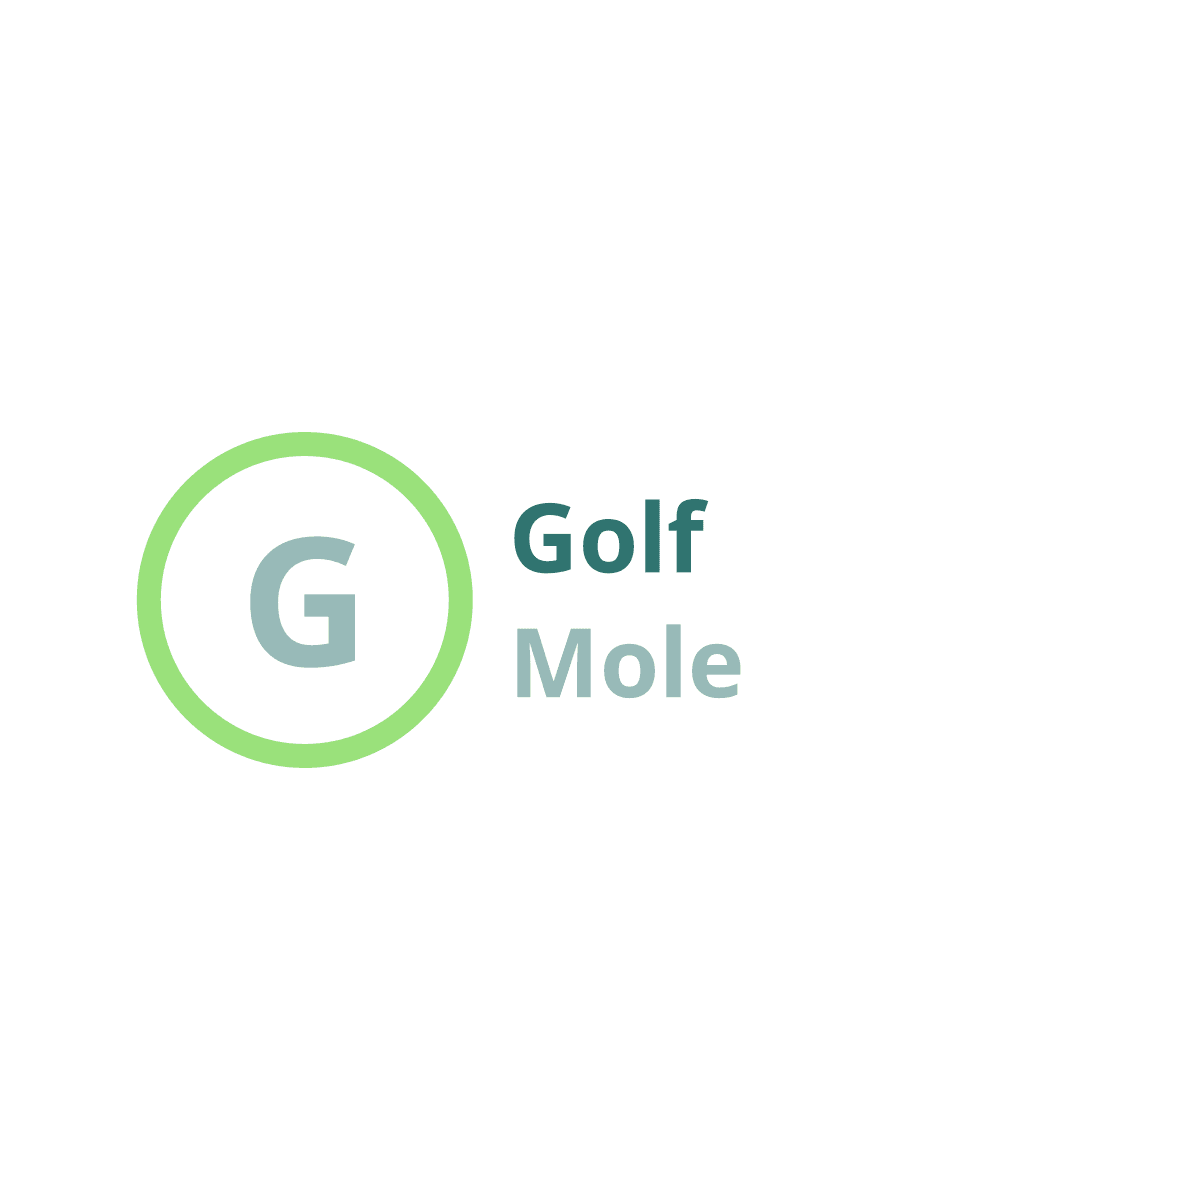 Golf Mole